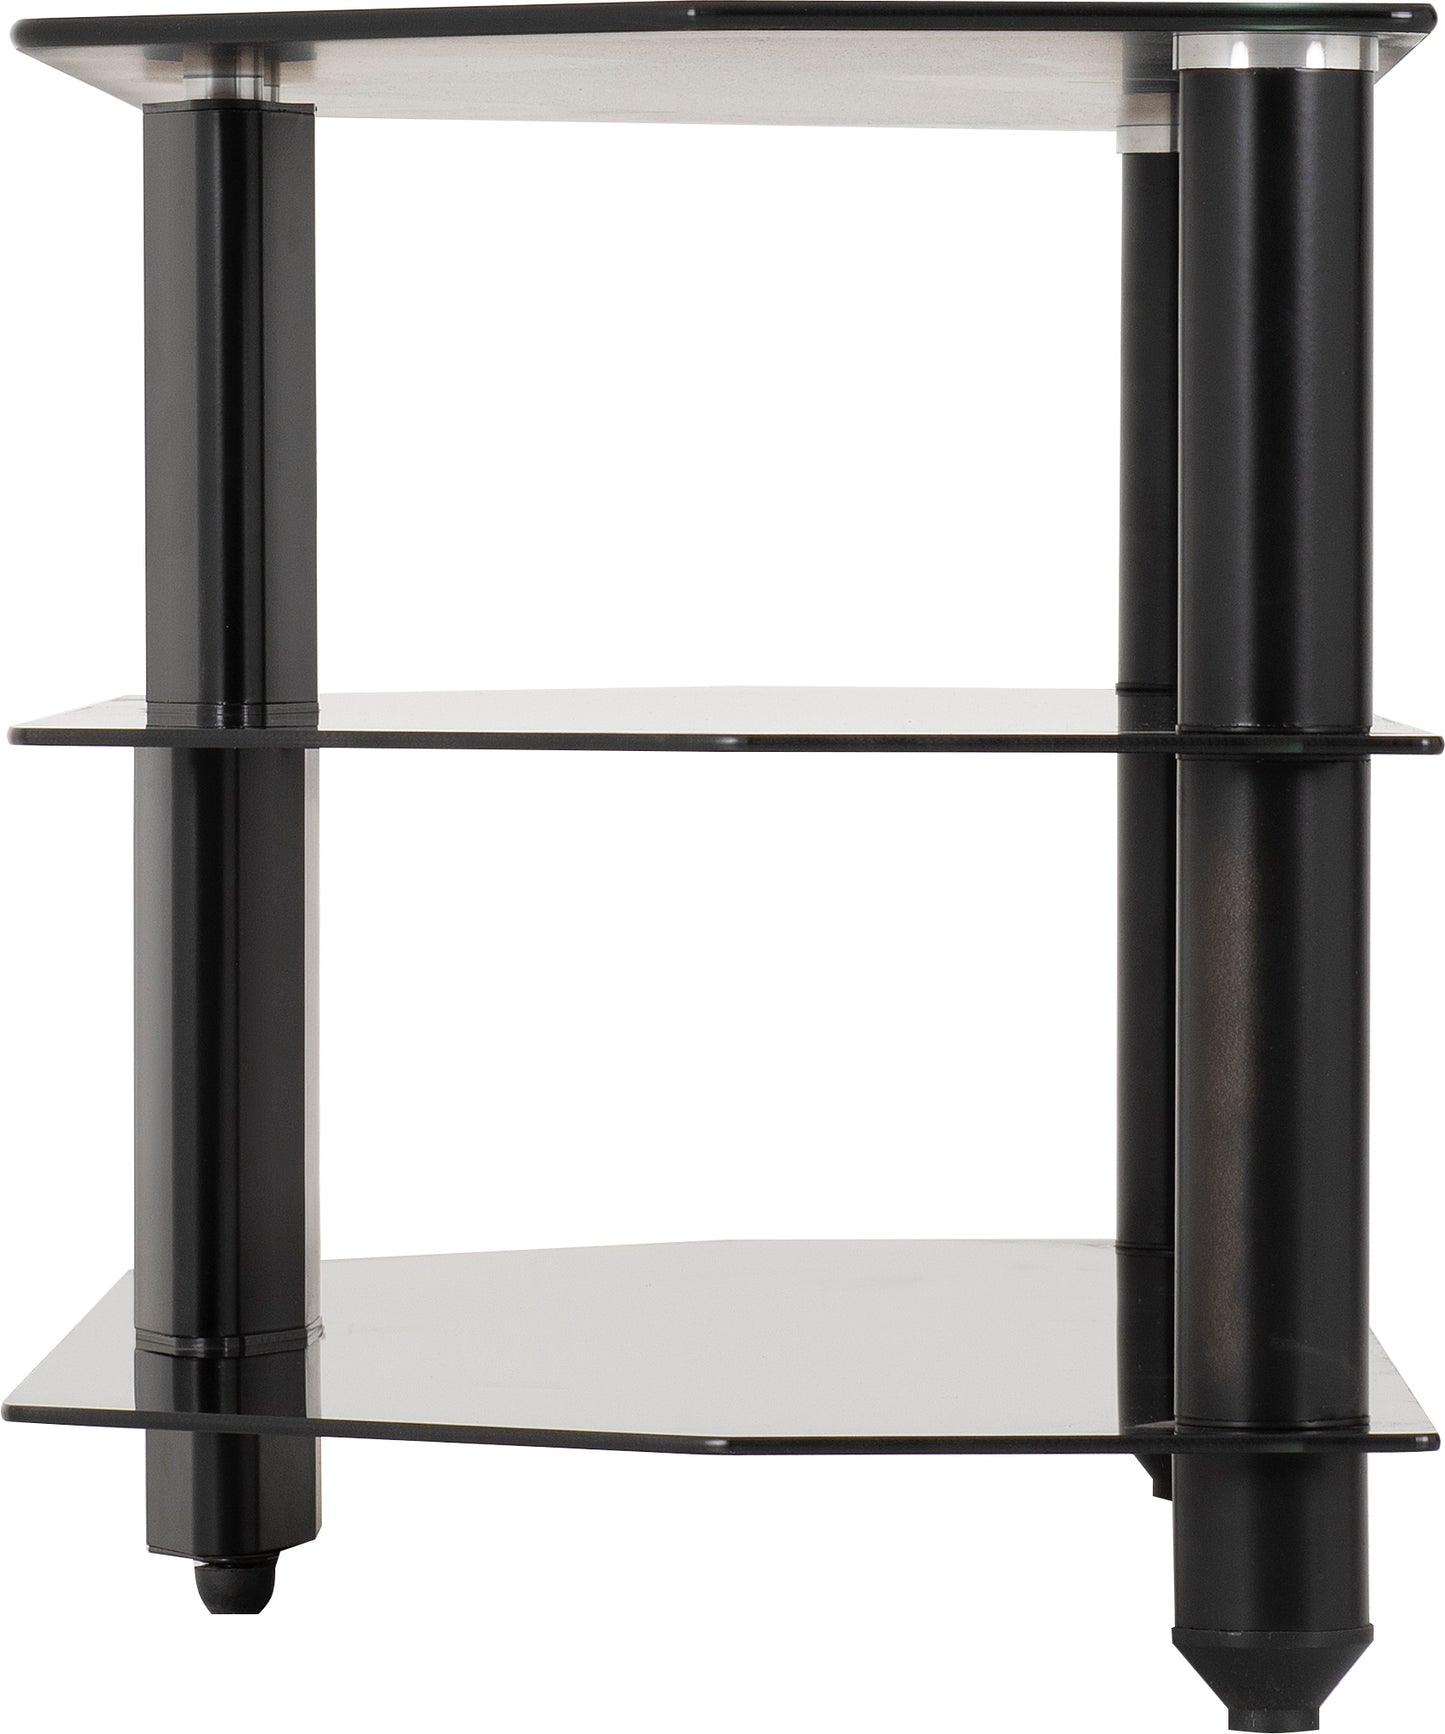 BROMLEY TV STAND - BLACK GLASS/BLACK